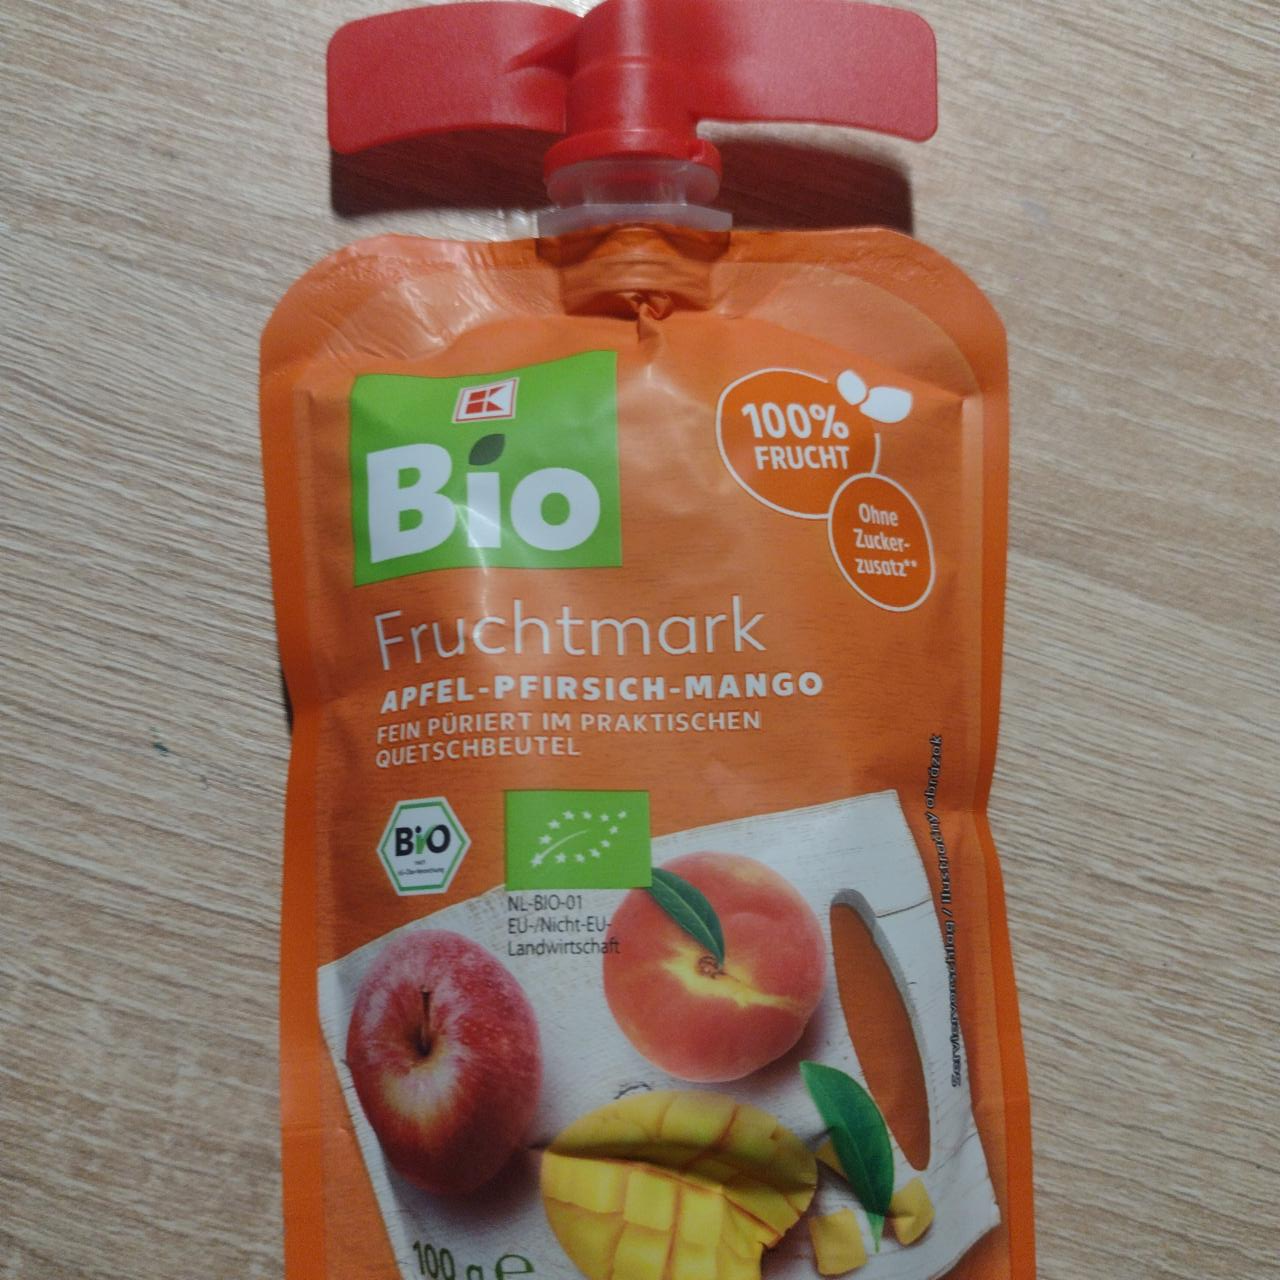 Képek - Fruchtmark Apfel Pfirsich Mango K-Bio